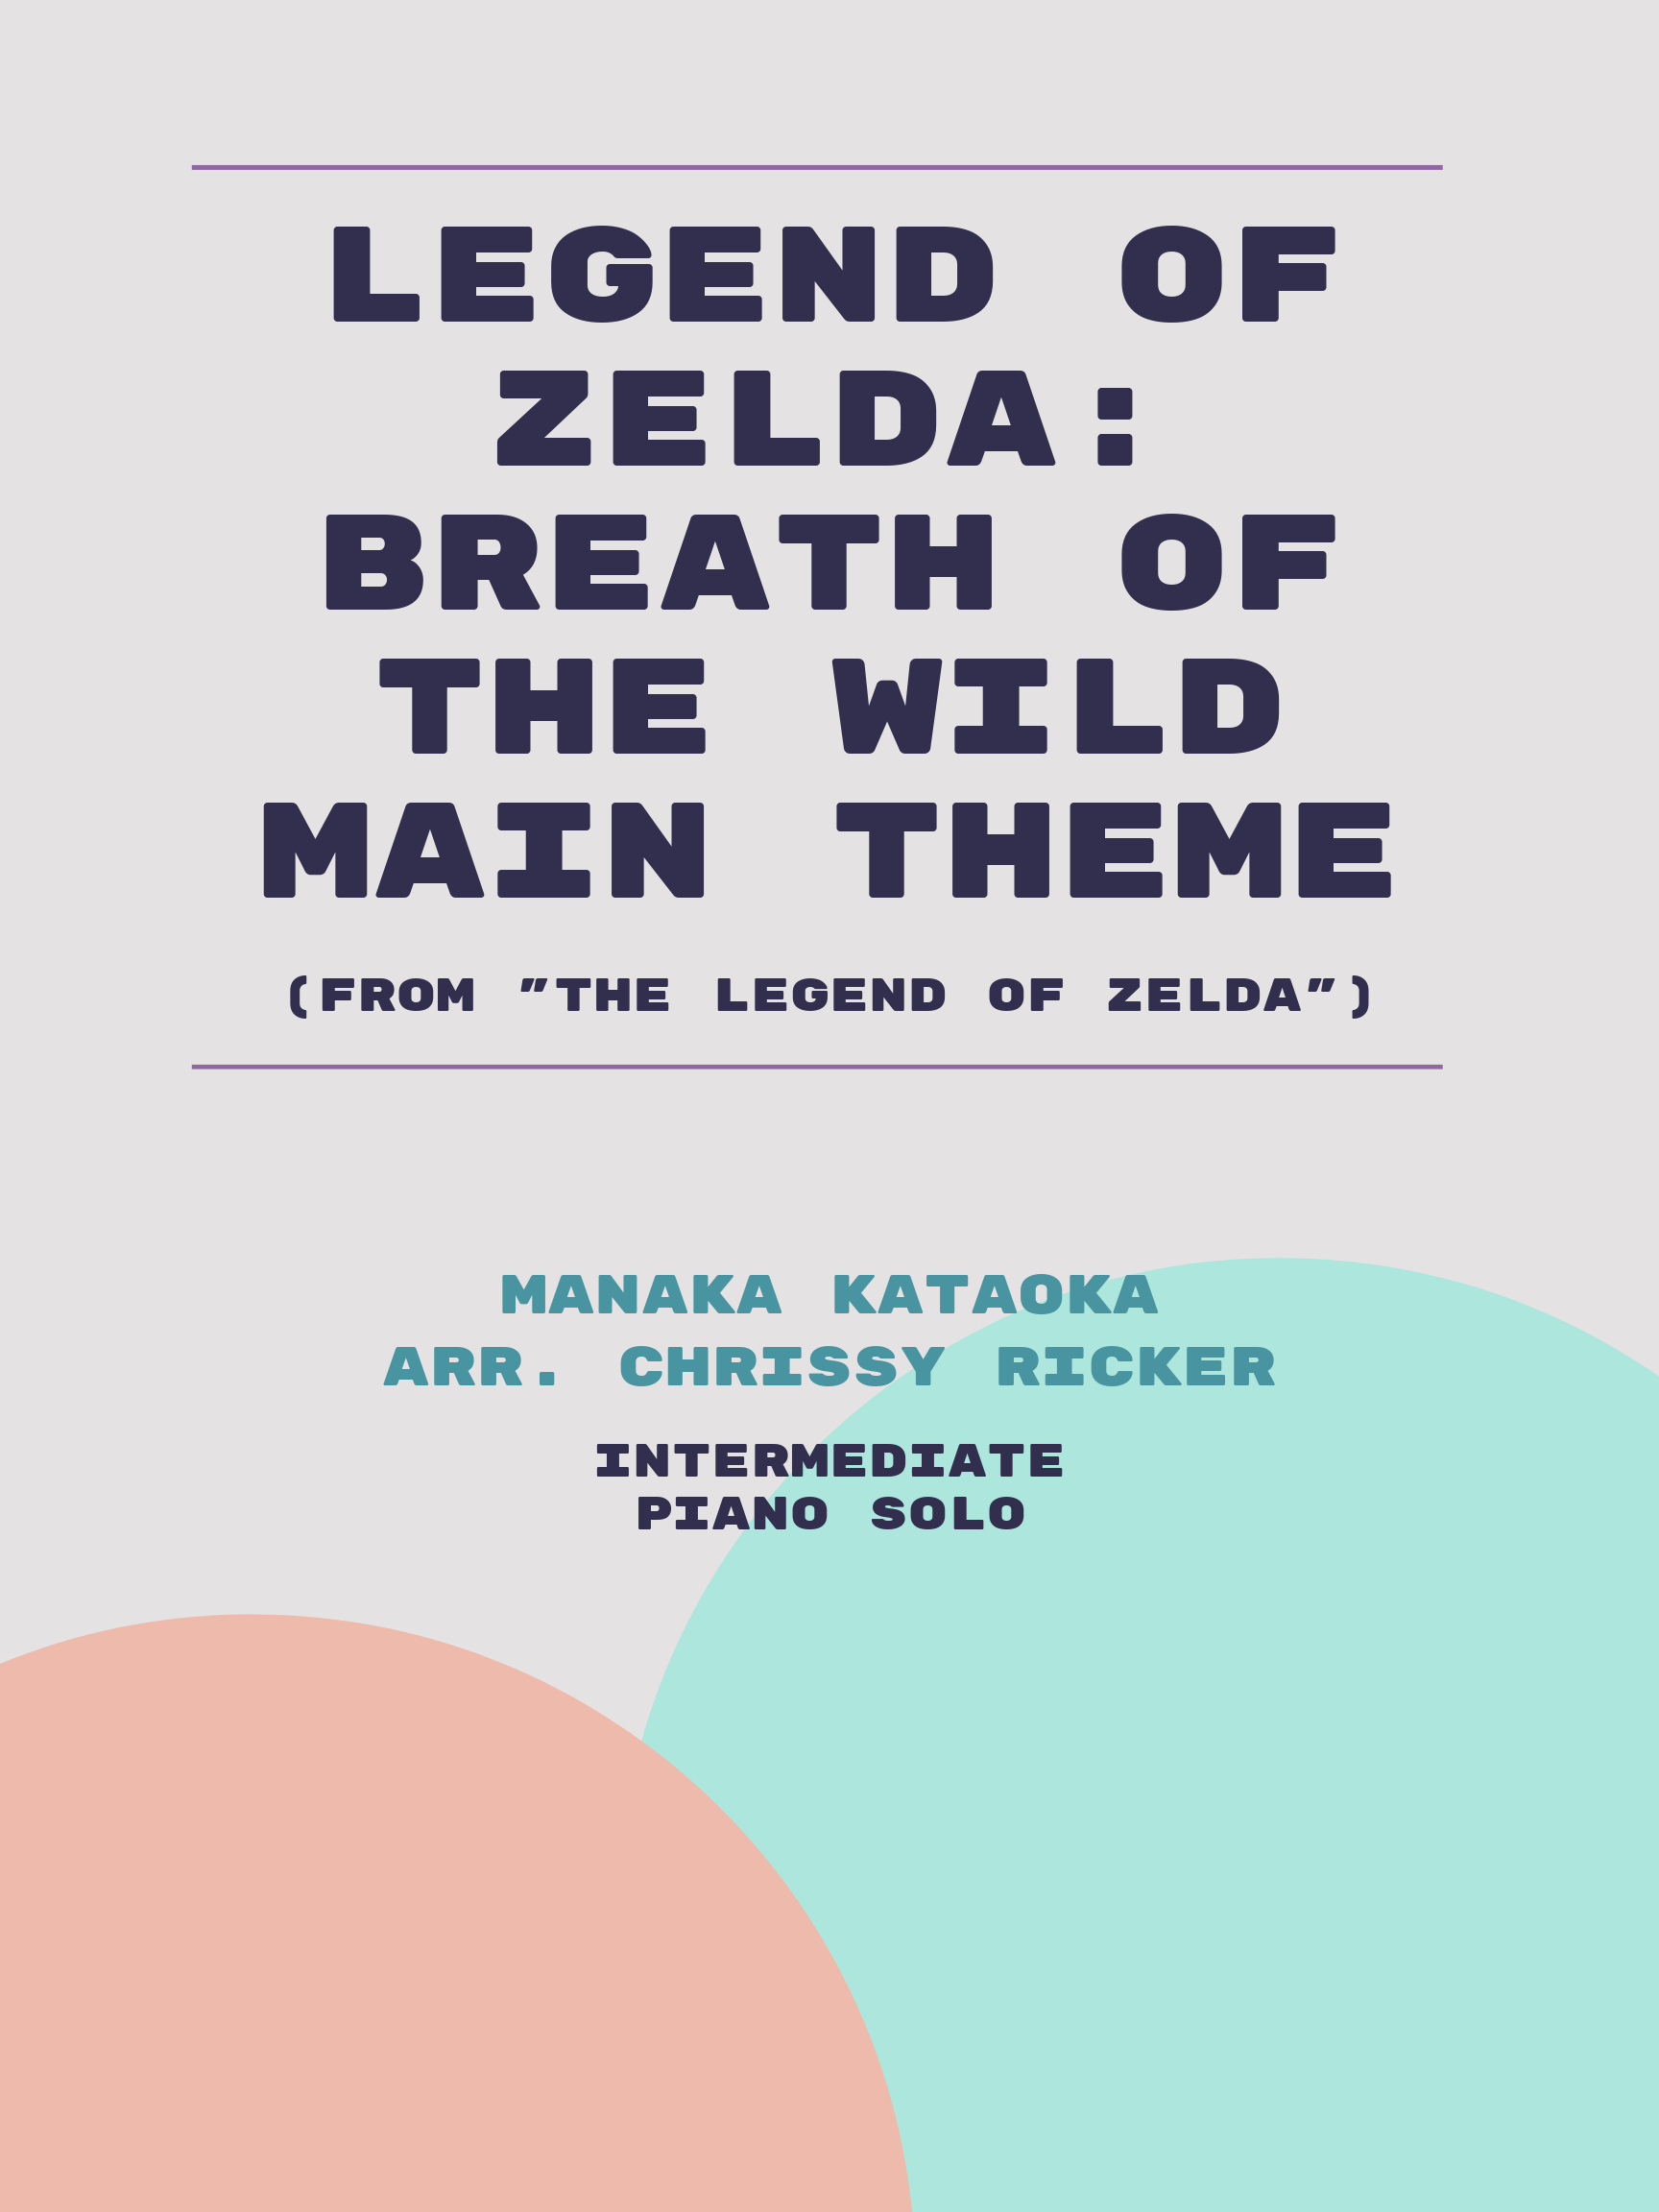 Legend of Zelda: Breath of the Wild Main Theme by Manaka Kataoka